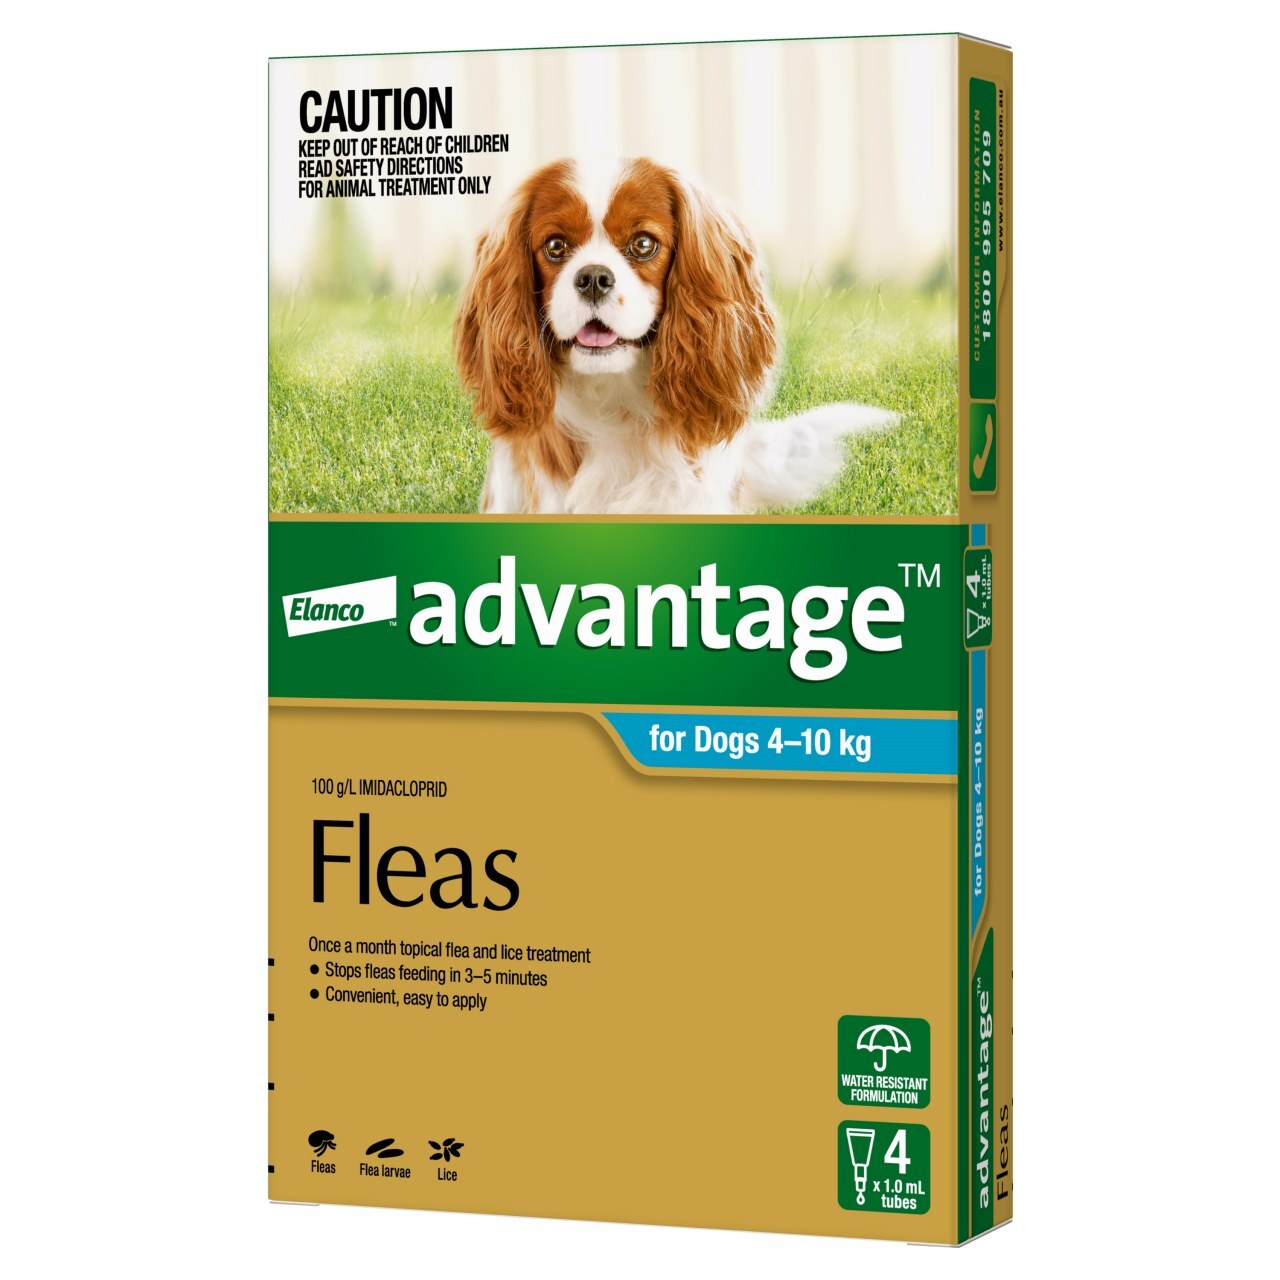 advantage-flea-control-for-dogs-4-10kg-4-pack-ebay